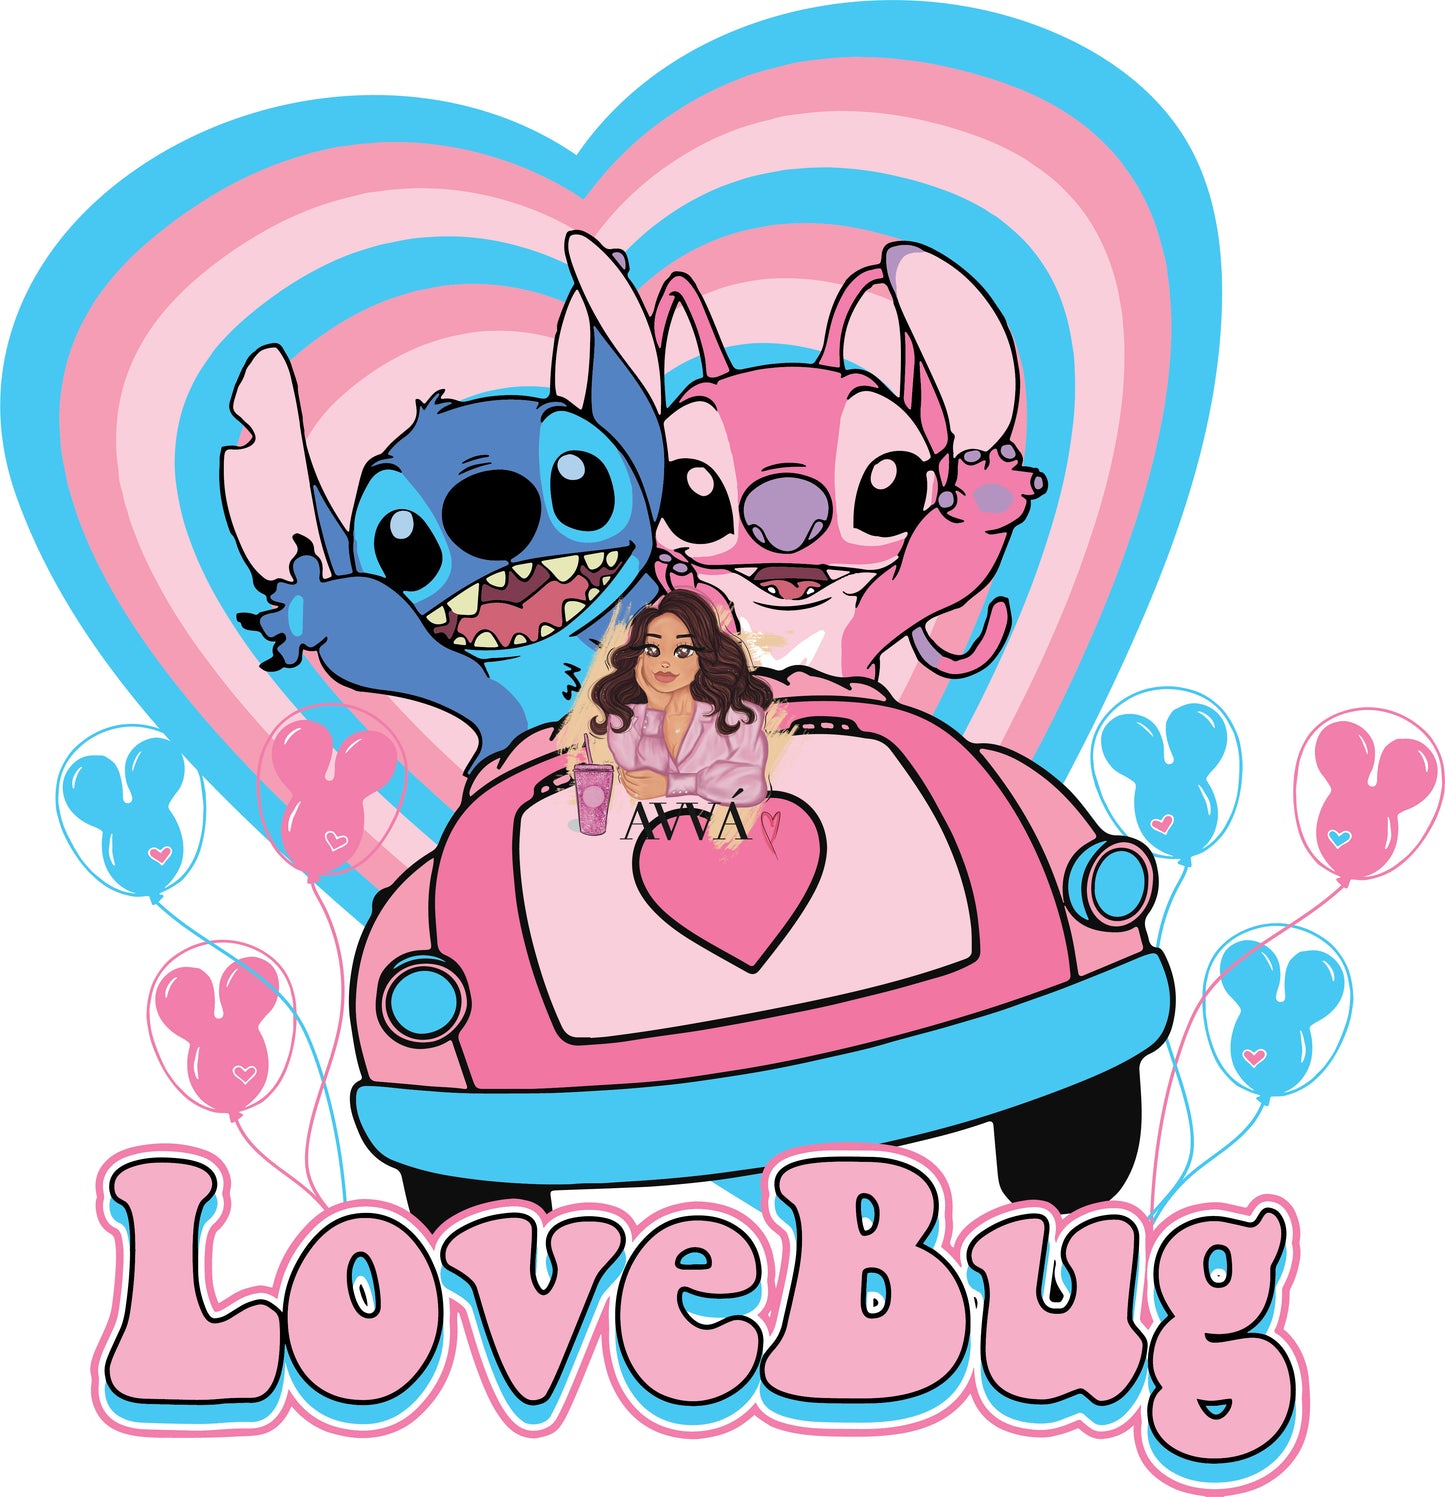 607 - Love Bugs Decal